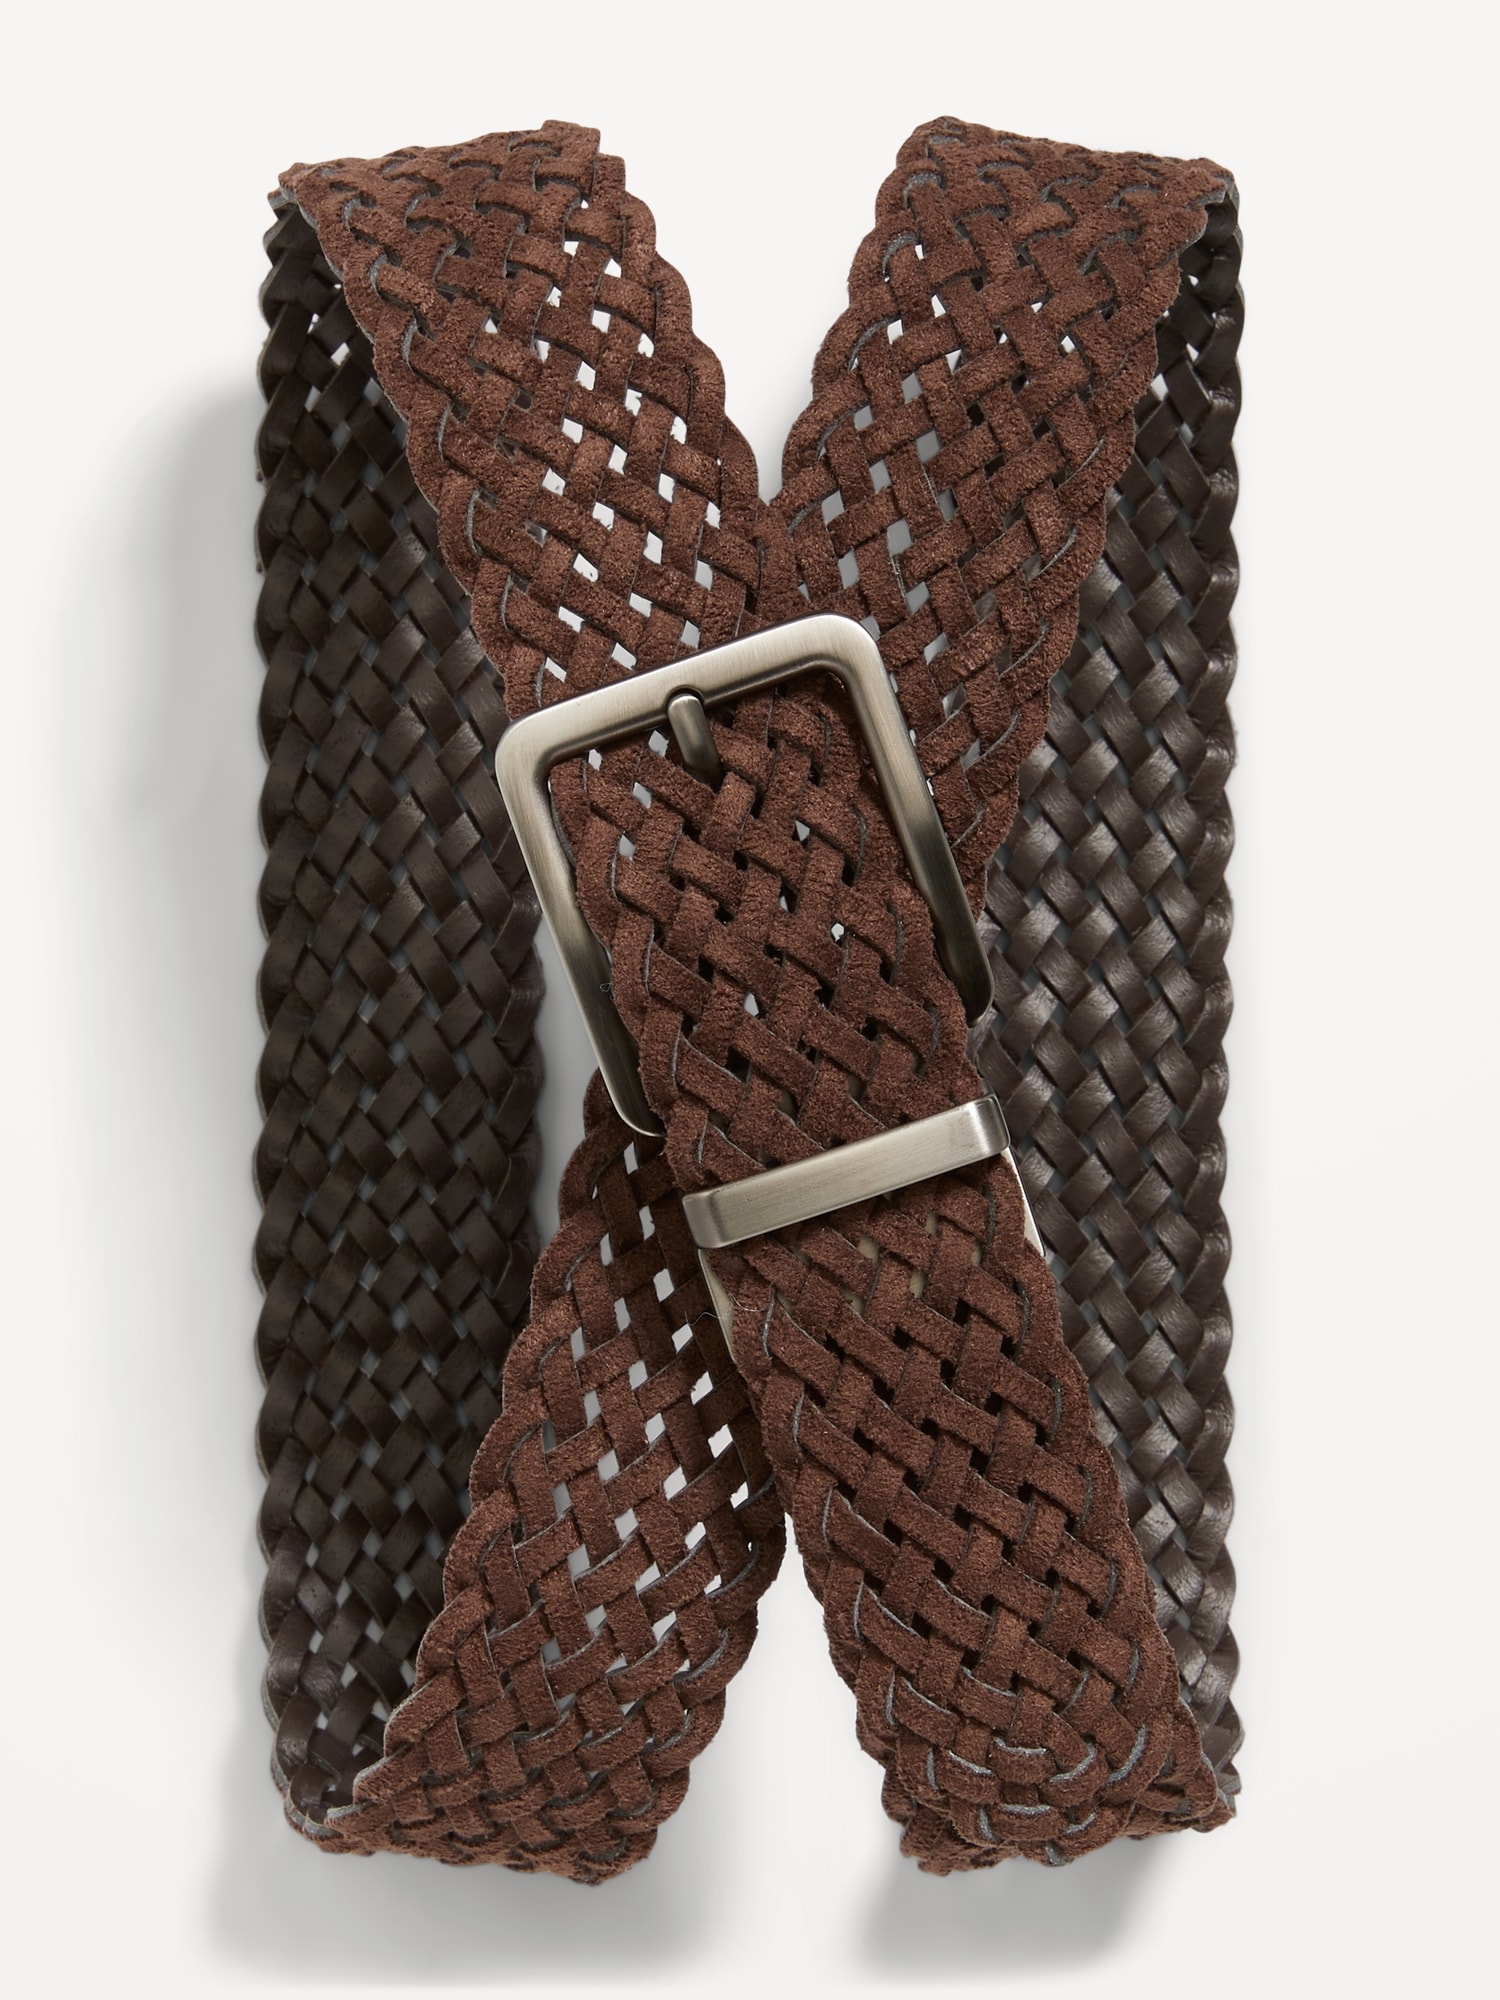 Stretch Leather Blend Braided Belt